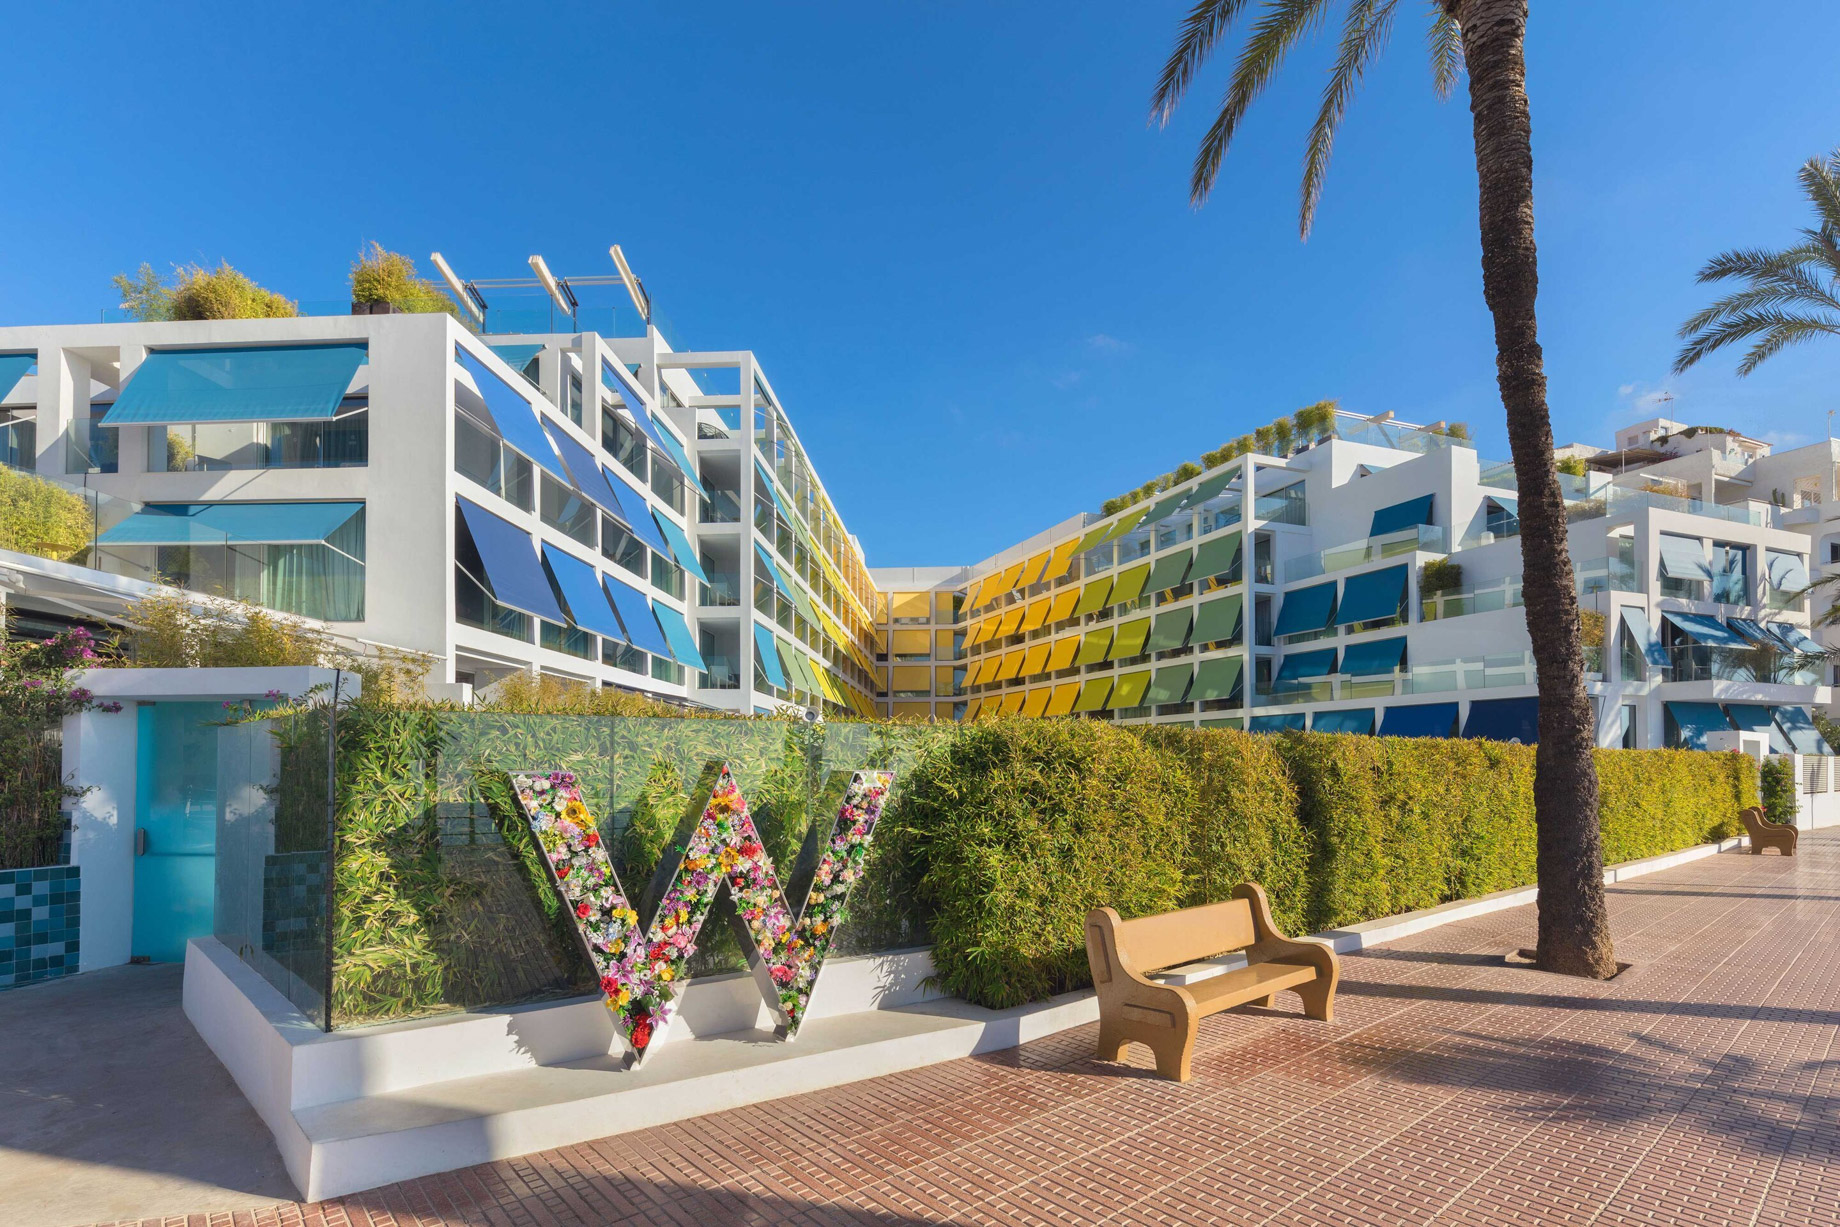 W Ibiza Hotel - Santa Eulalia del Rio, Spain - W Ibiza Boulevard Entrance